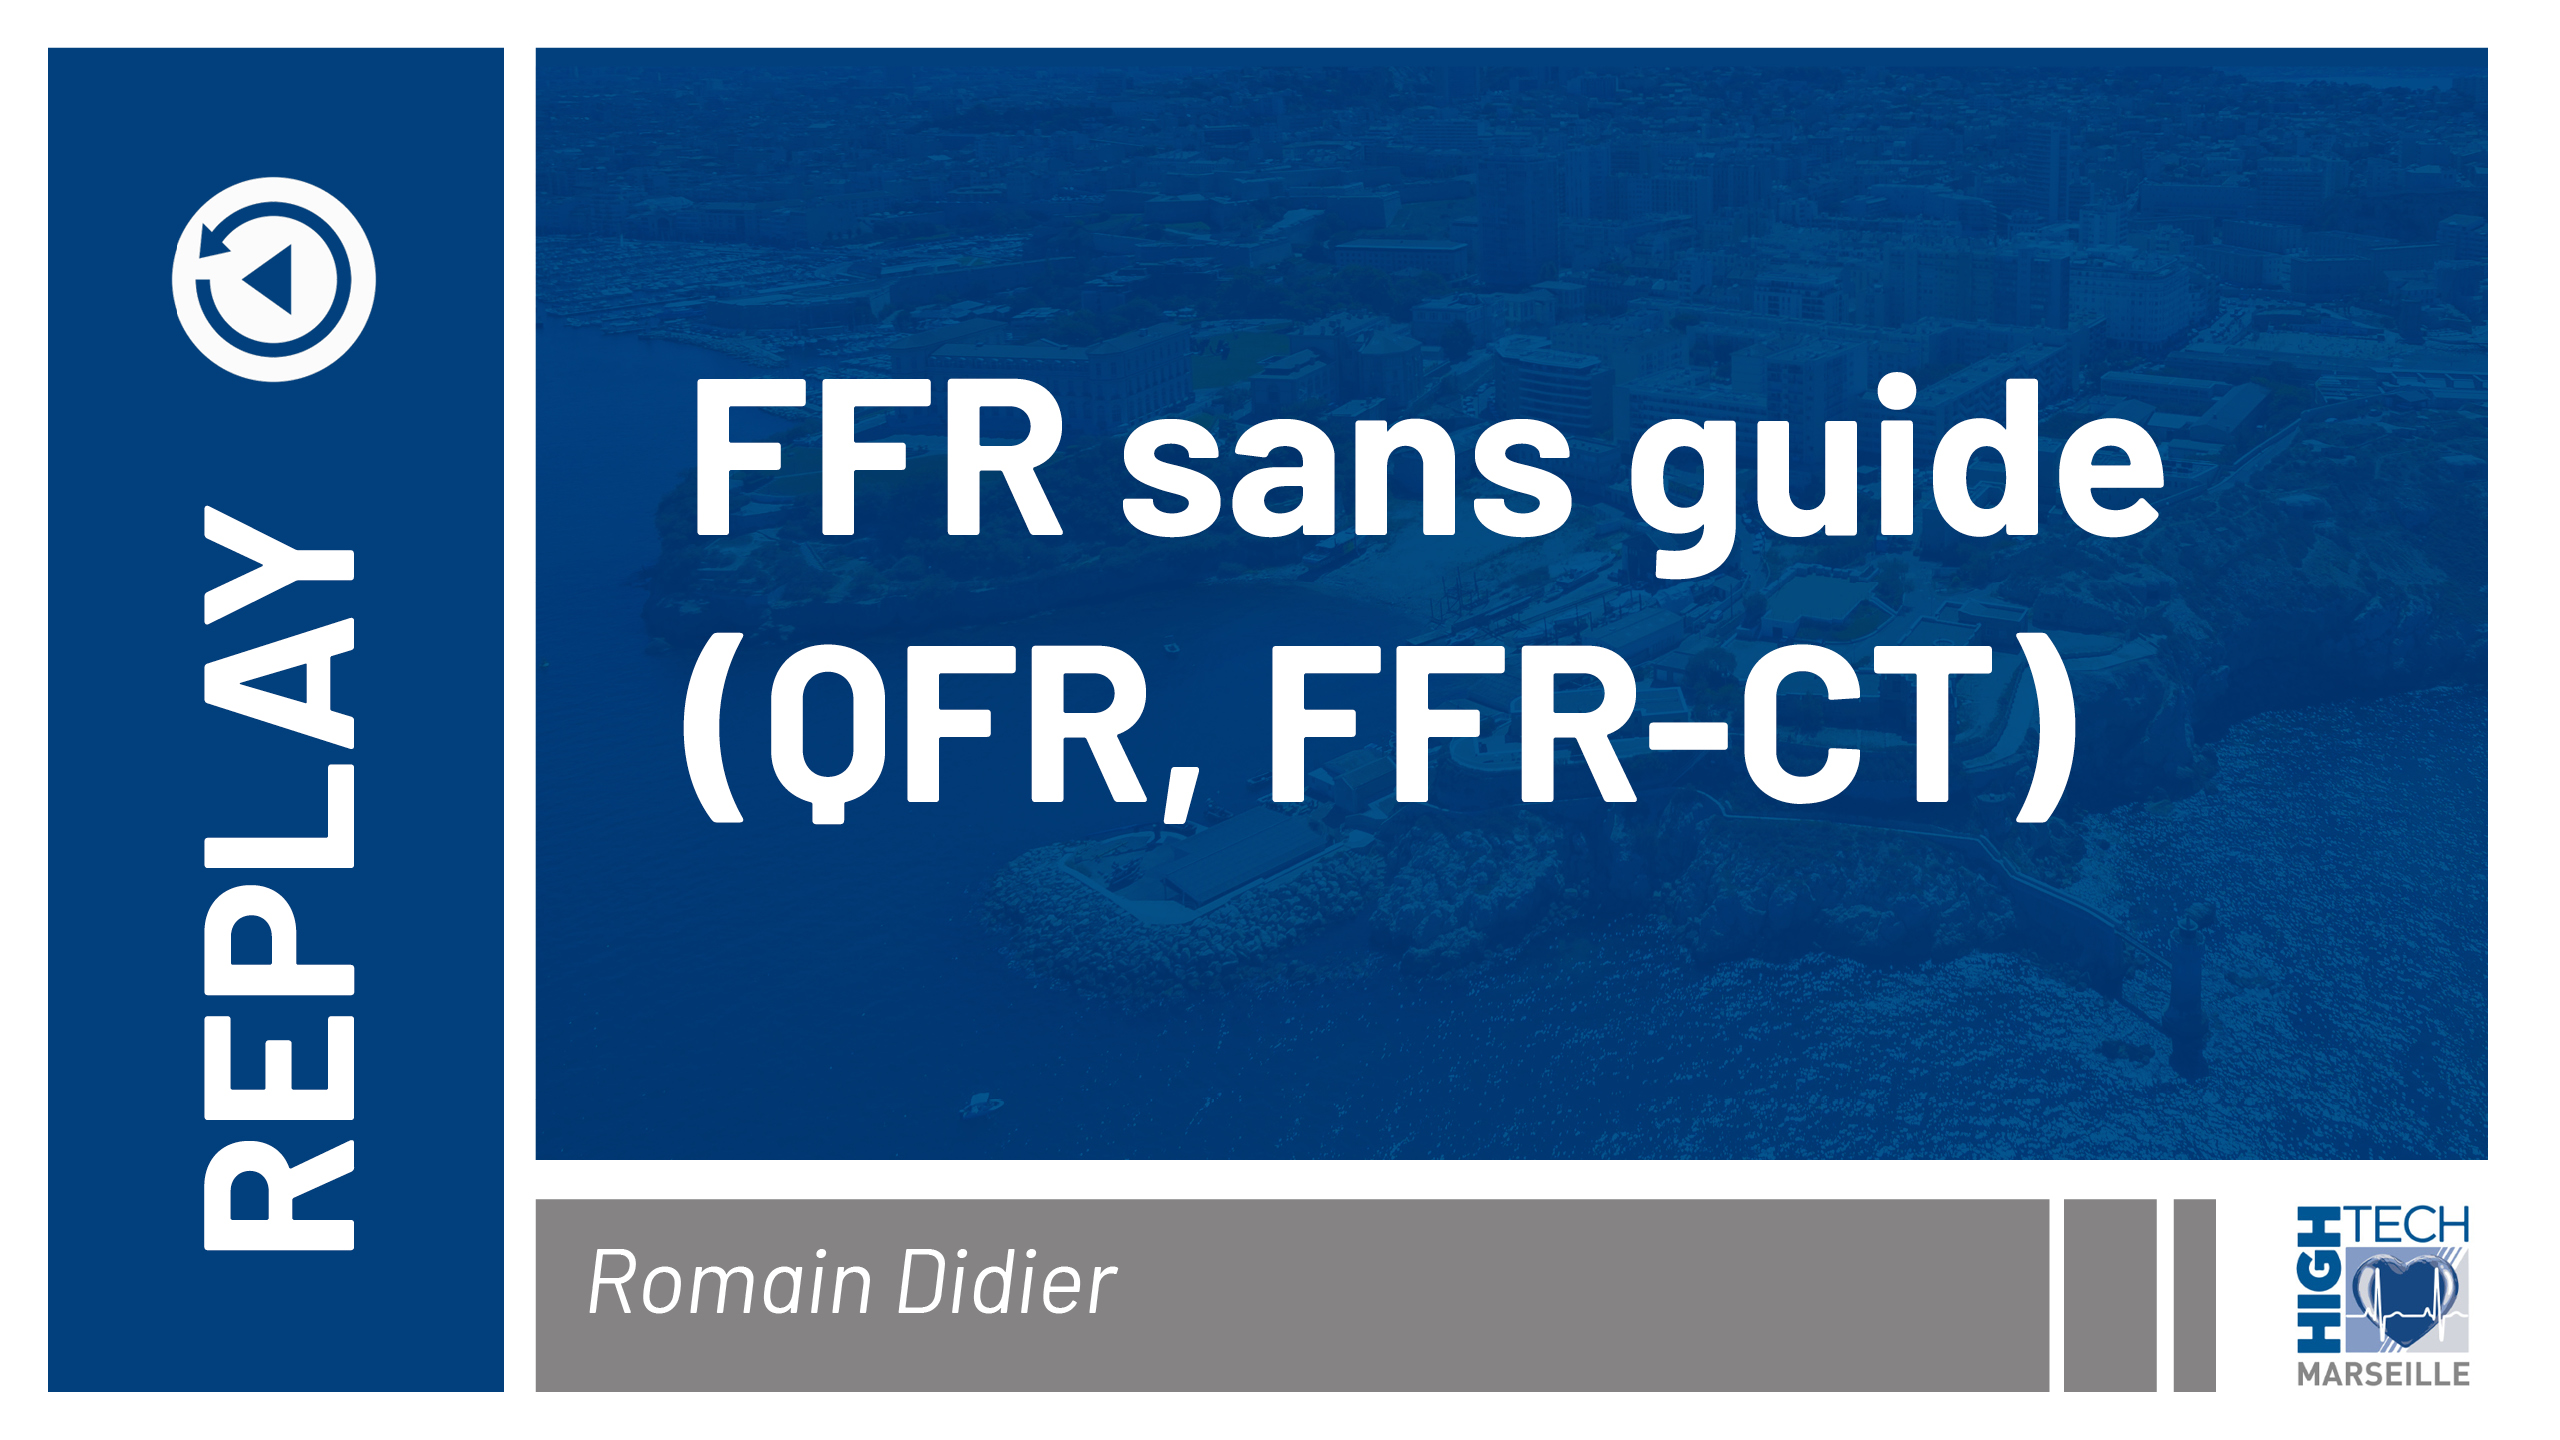 FFR sans guide – Romain Didier